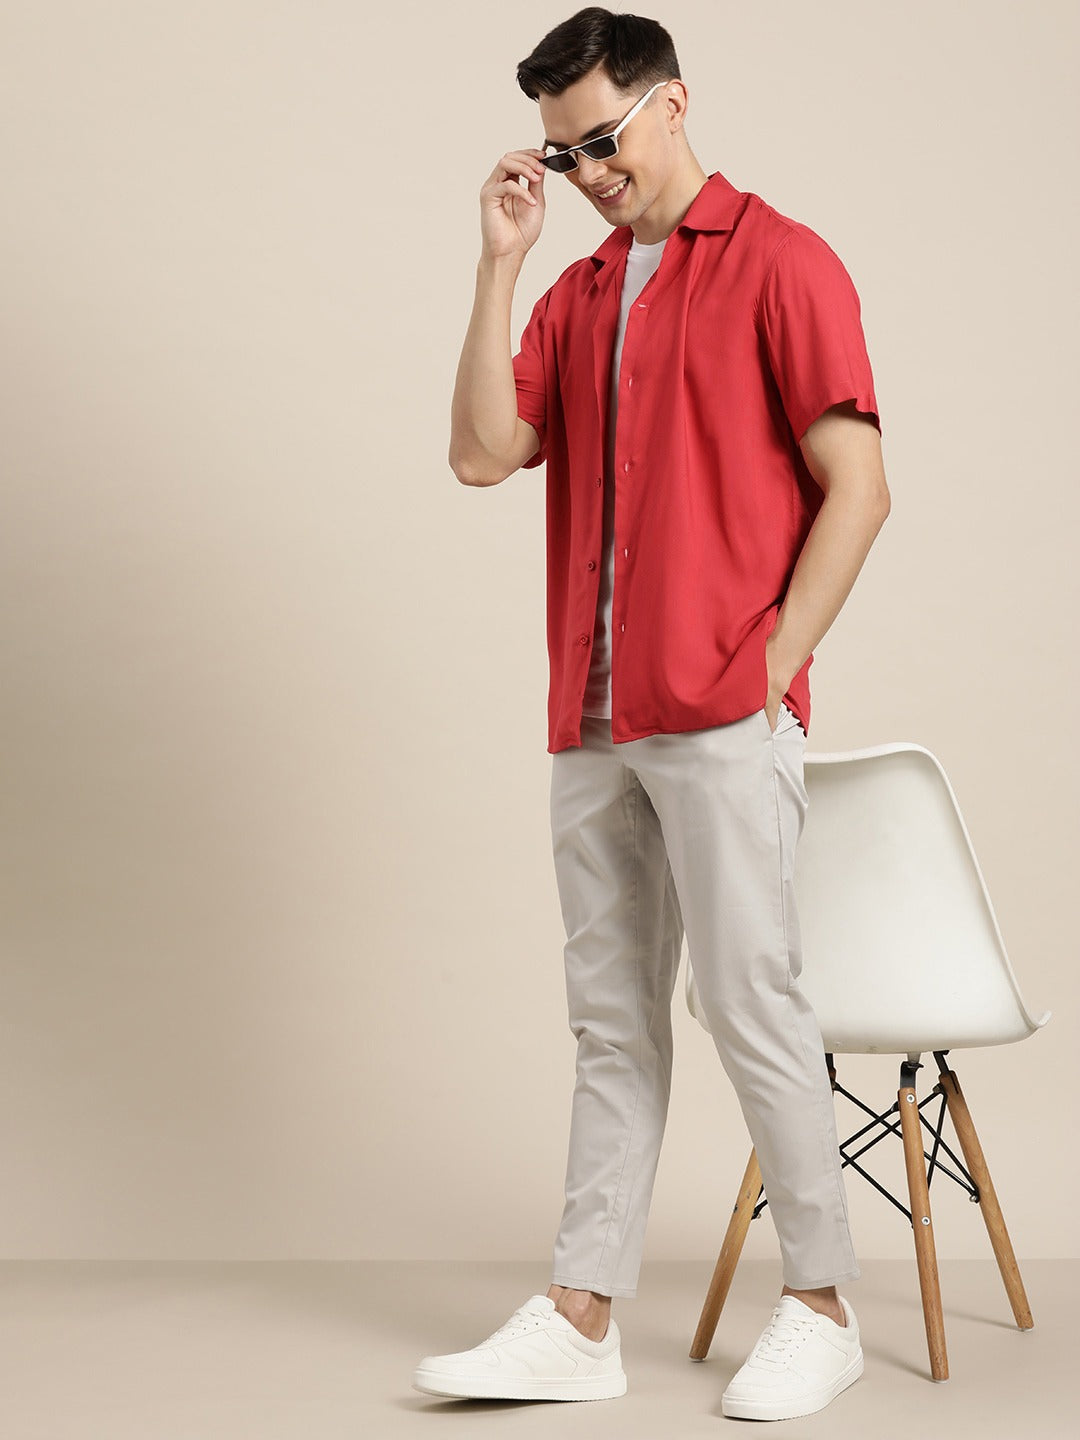 kingpetrel Men Solid Casual Red Shirt - Buy kingpetrel Men Solid Casual Red  Shirt Online at Best Prices in India | Flipkart.com